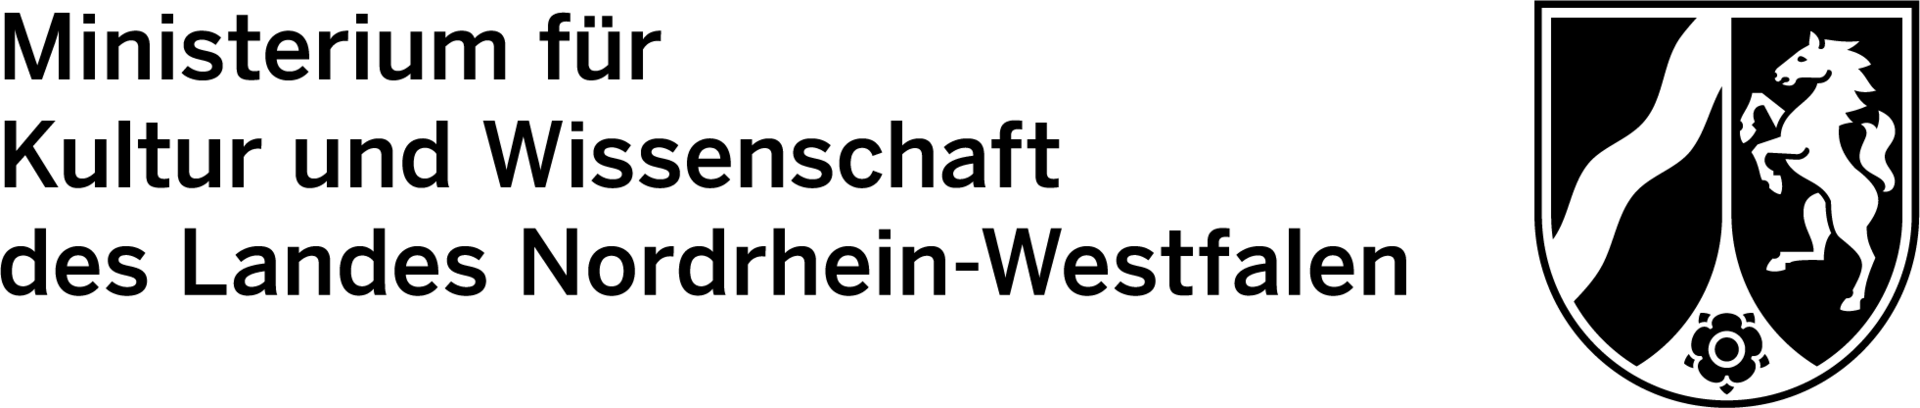 Logo des NRW-Ministeriums mit Wappen